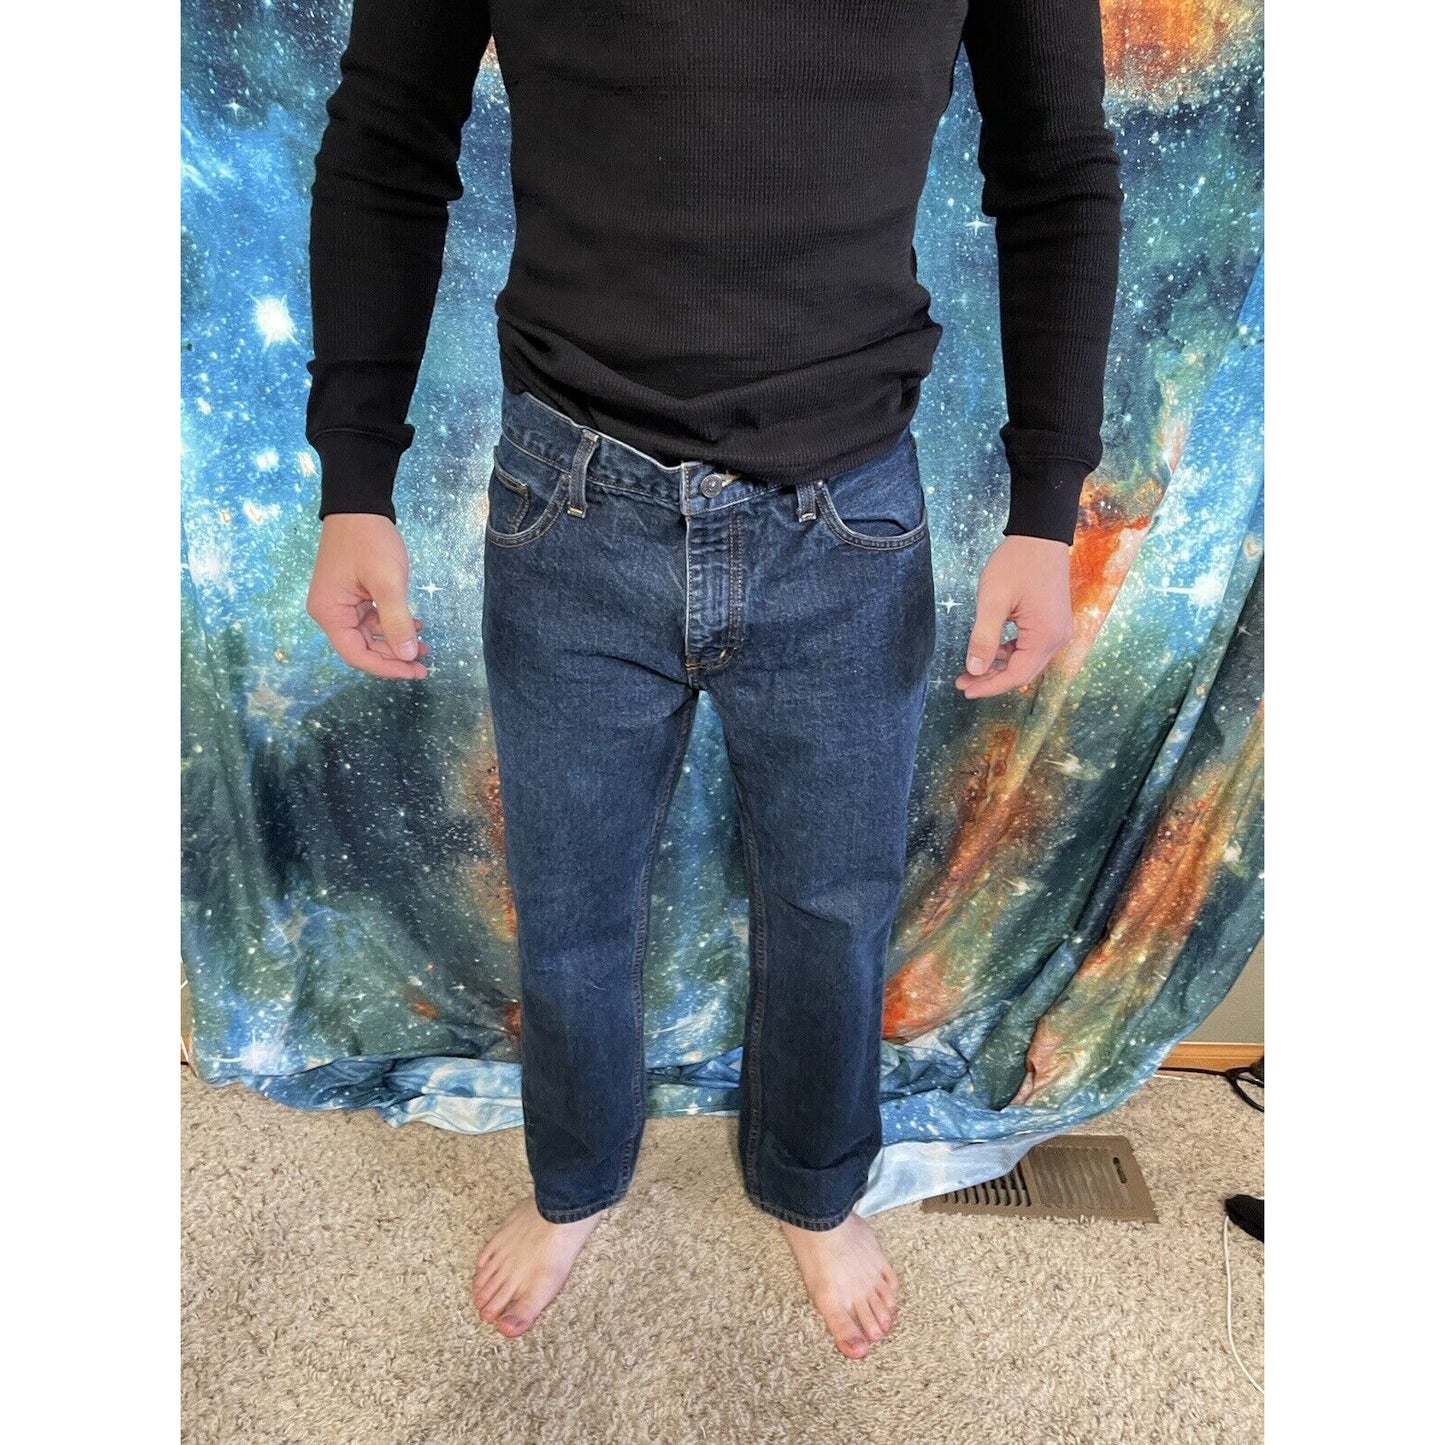 Arizona Jean Co. Men's Original Straight Dark Wash Denim Jeans Size 29x34